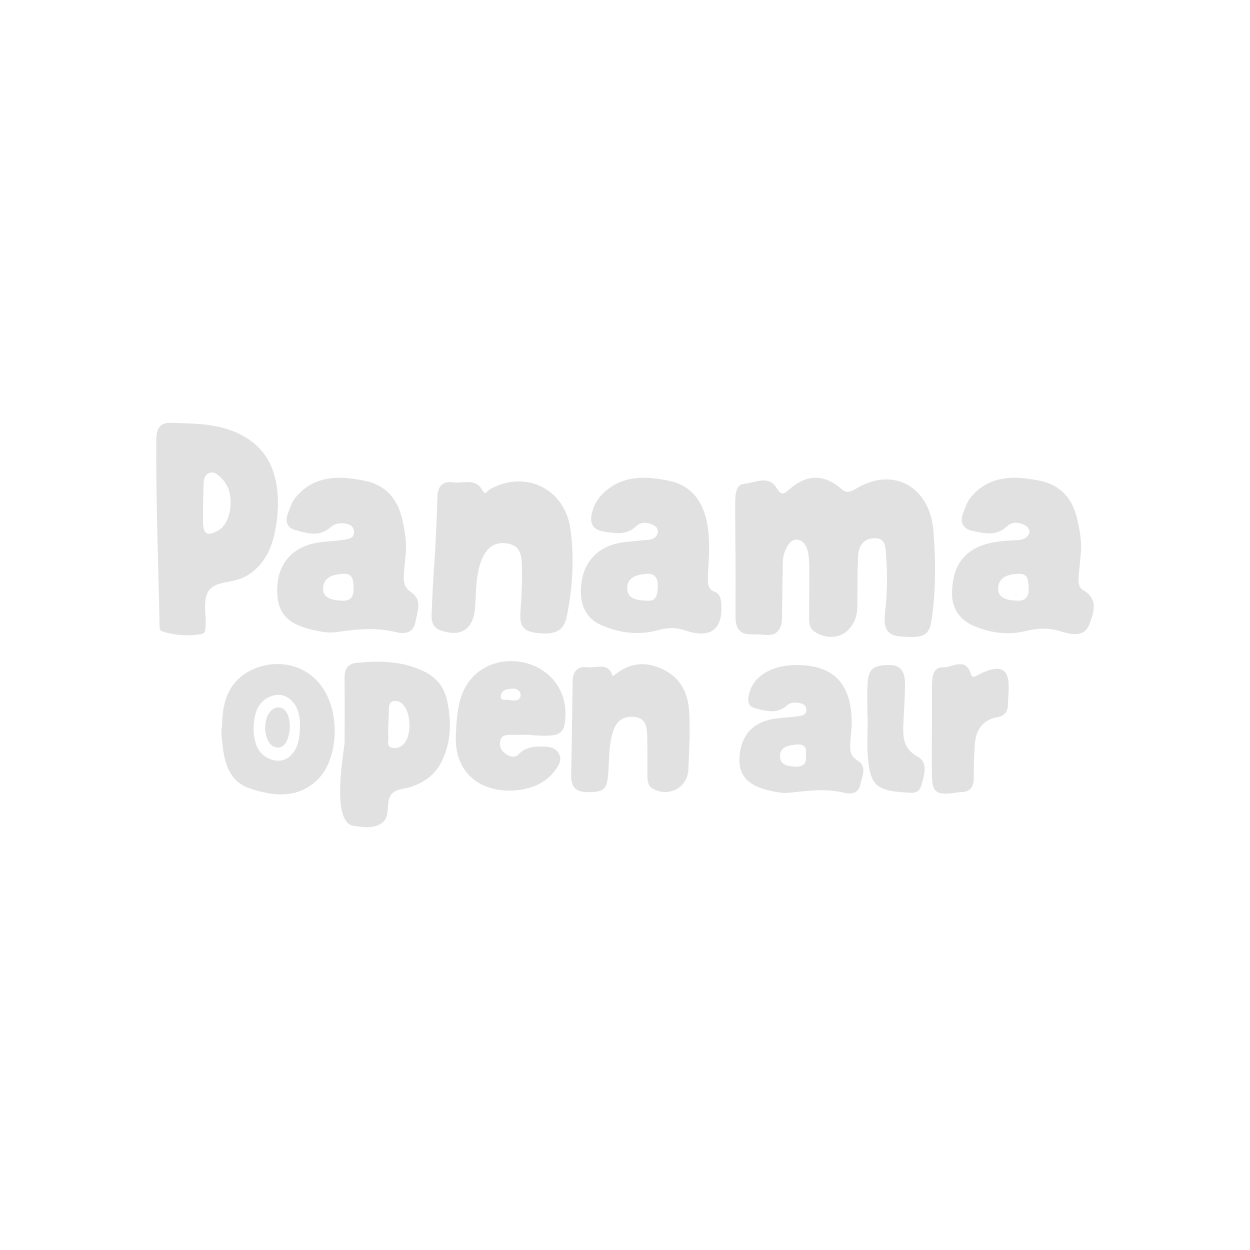 Panama_RE